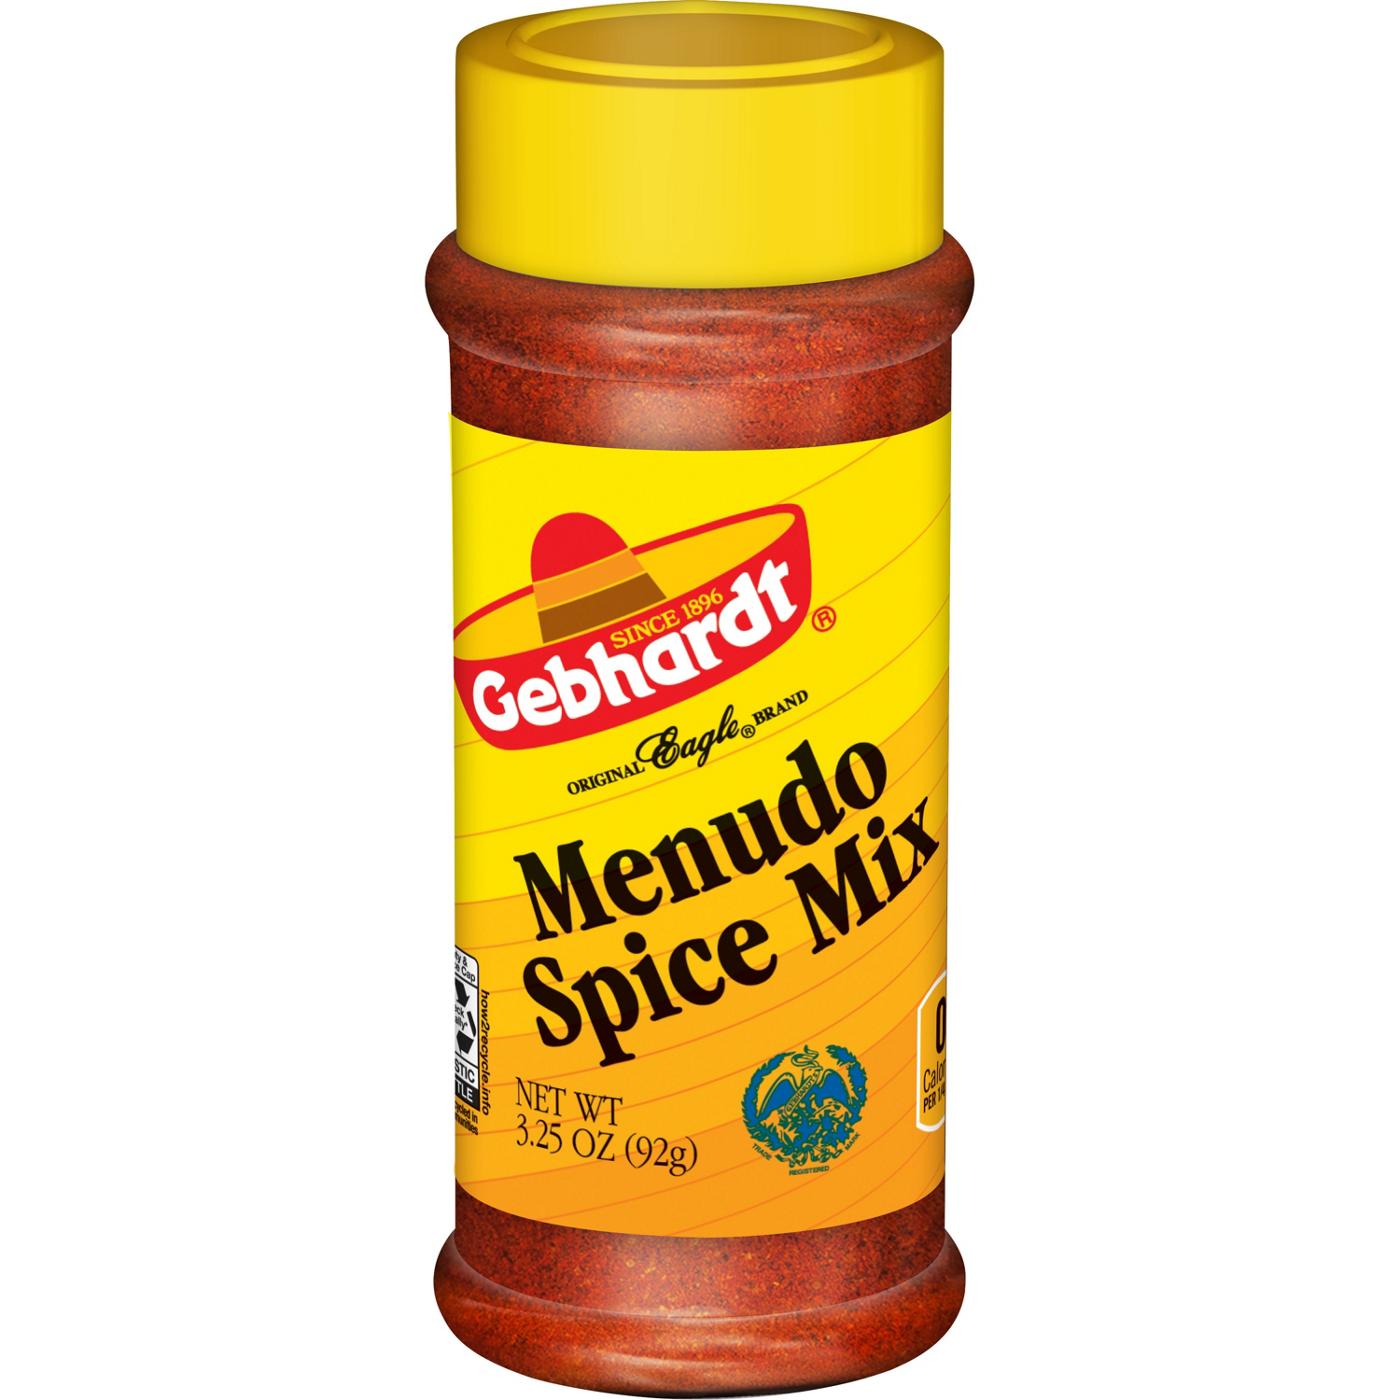 Gebhardt’s Menudo Spice; image 1 of 3